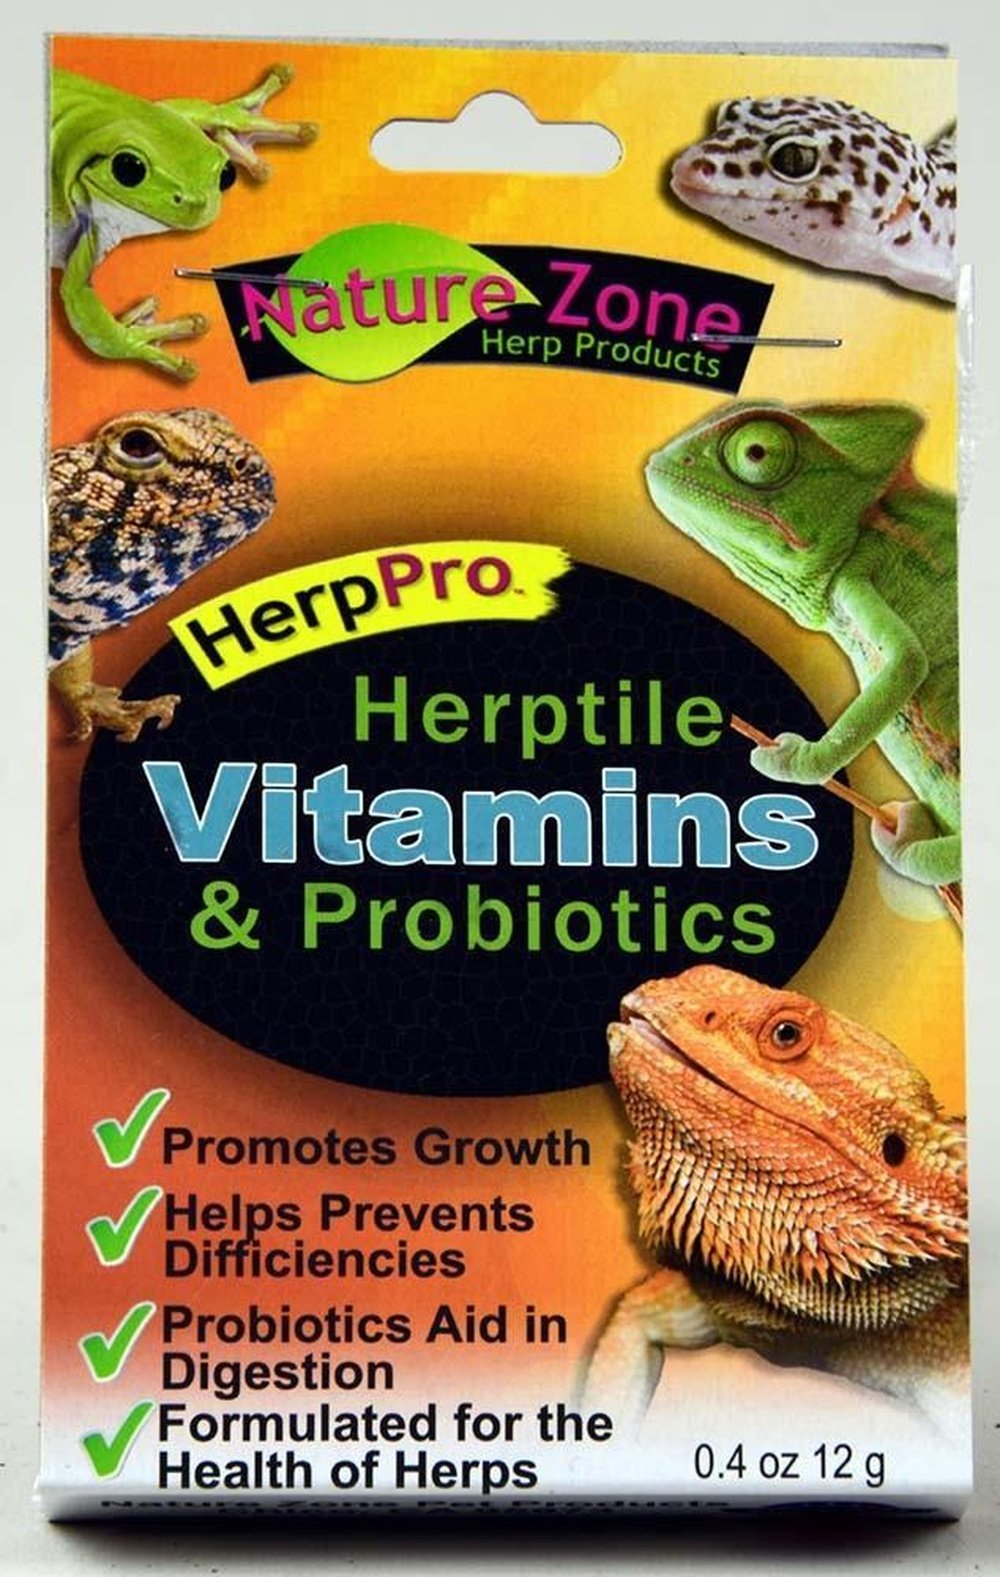 Nature Zone Herptile Vitamins and Probiotics, 0.4 oz